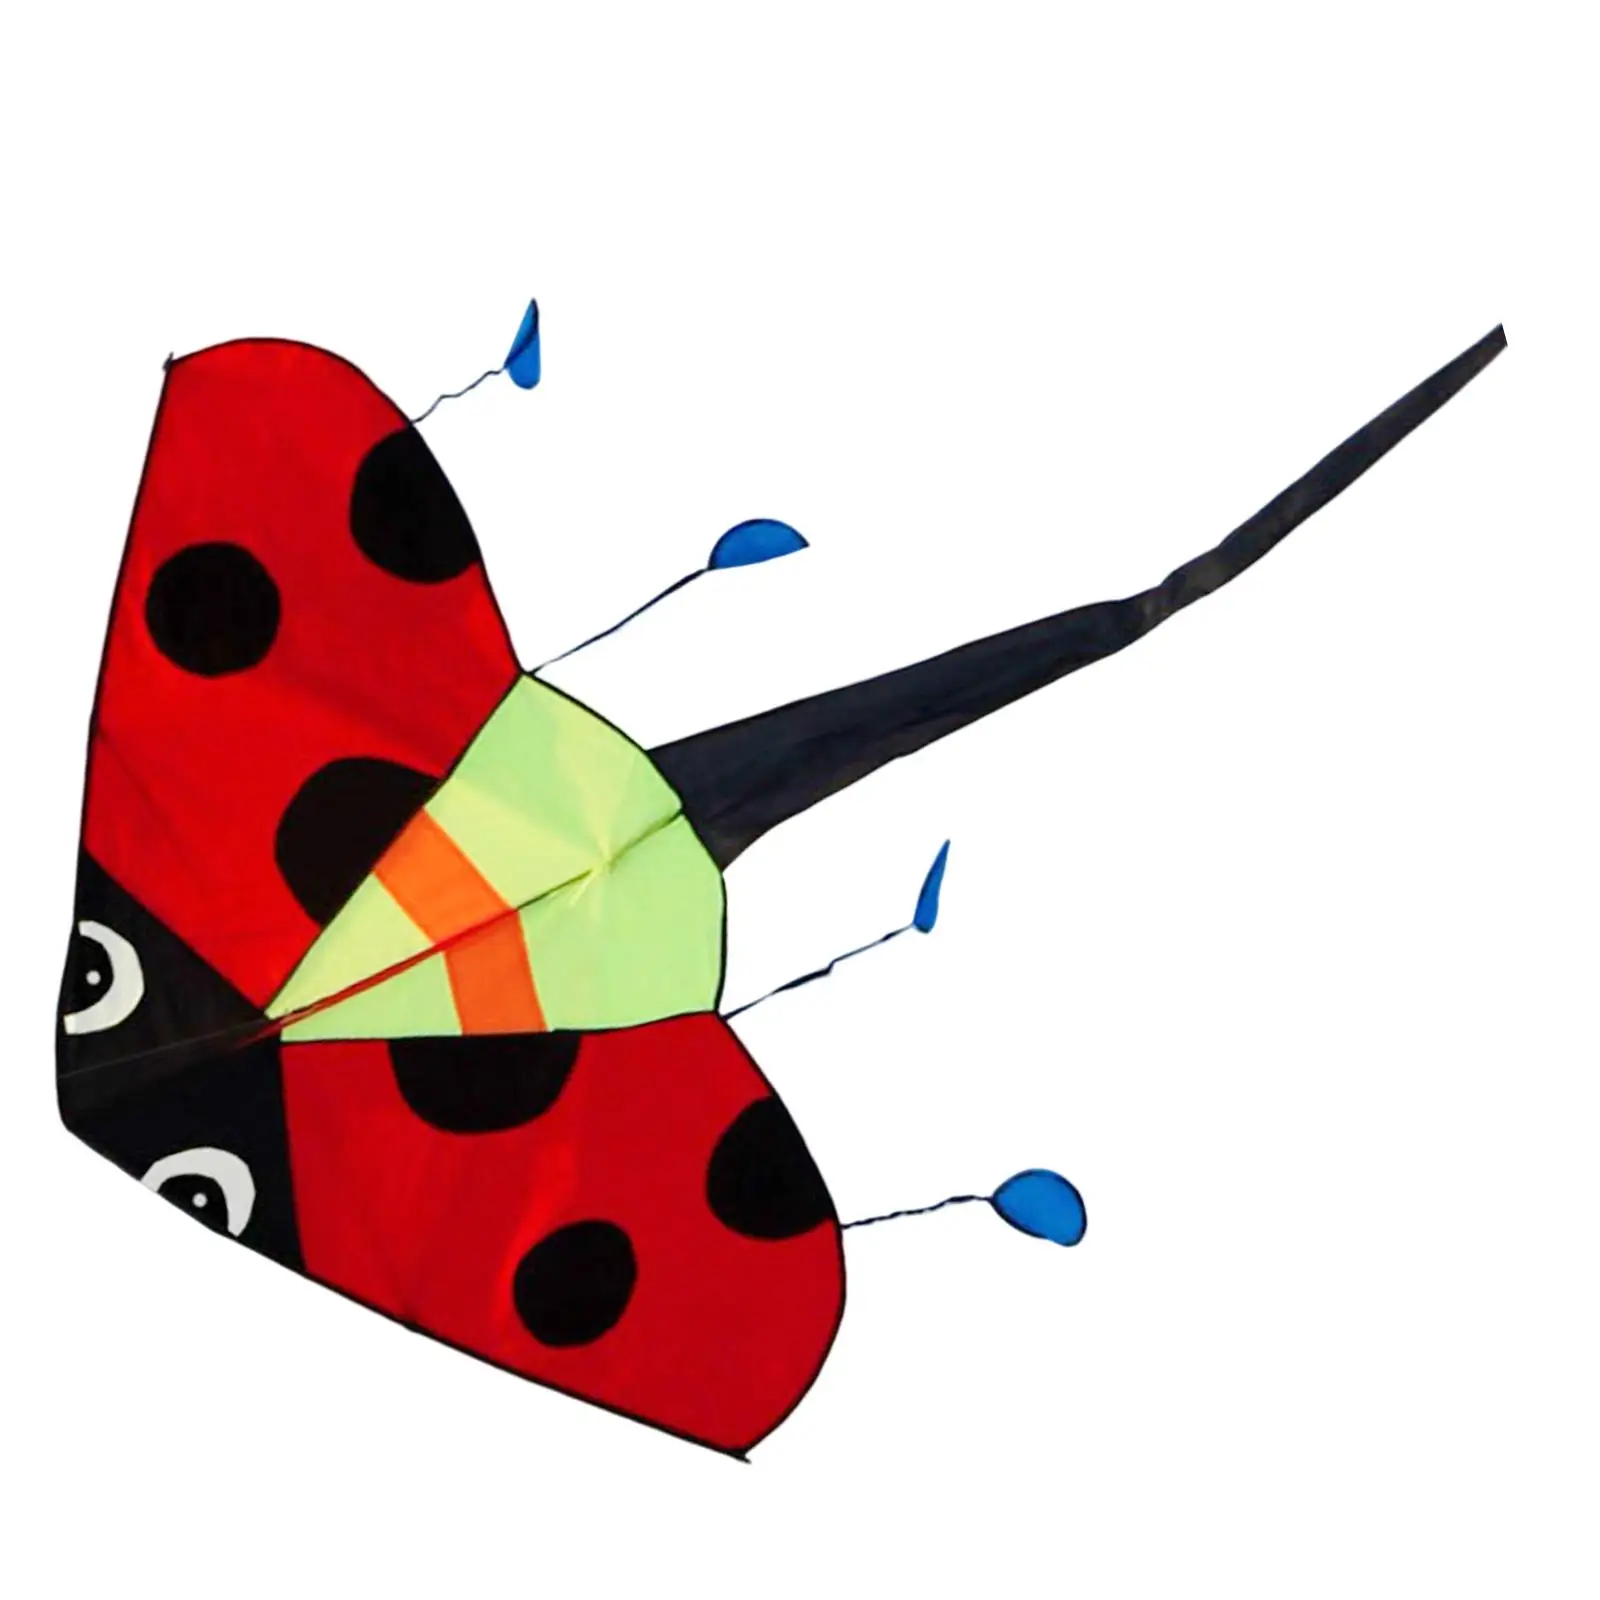 Giant Delta Kite Triangle Kite Vivid Fly Kite for Activities